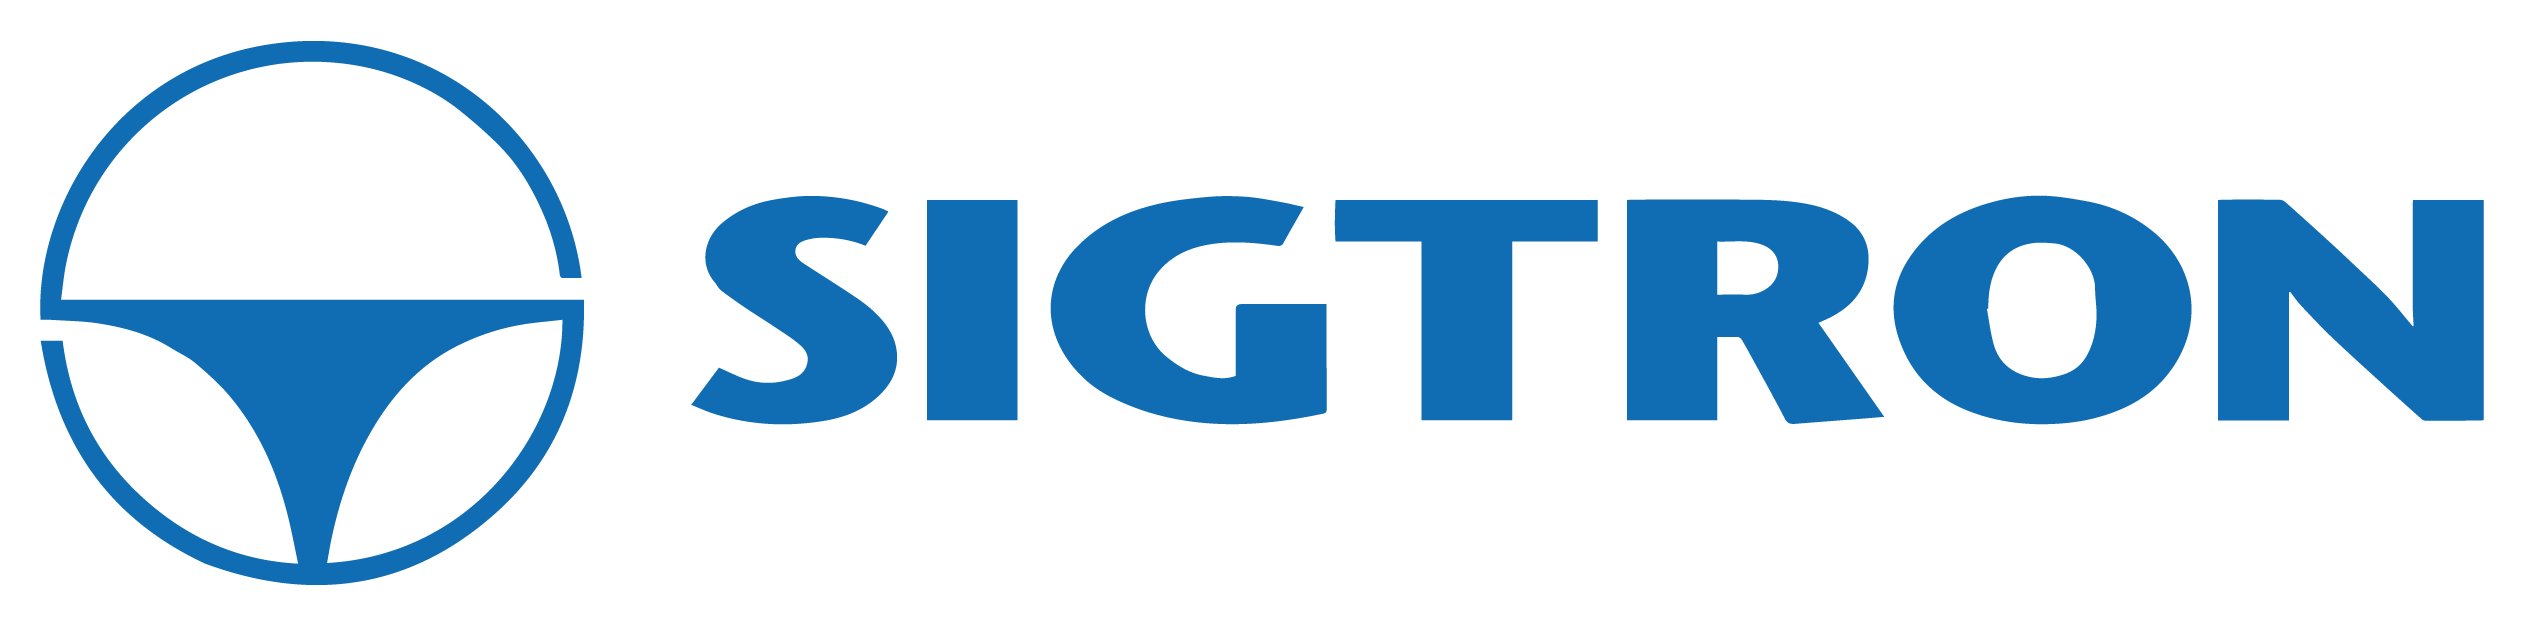 Logotipo Sigtron